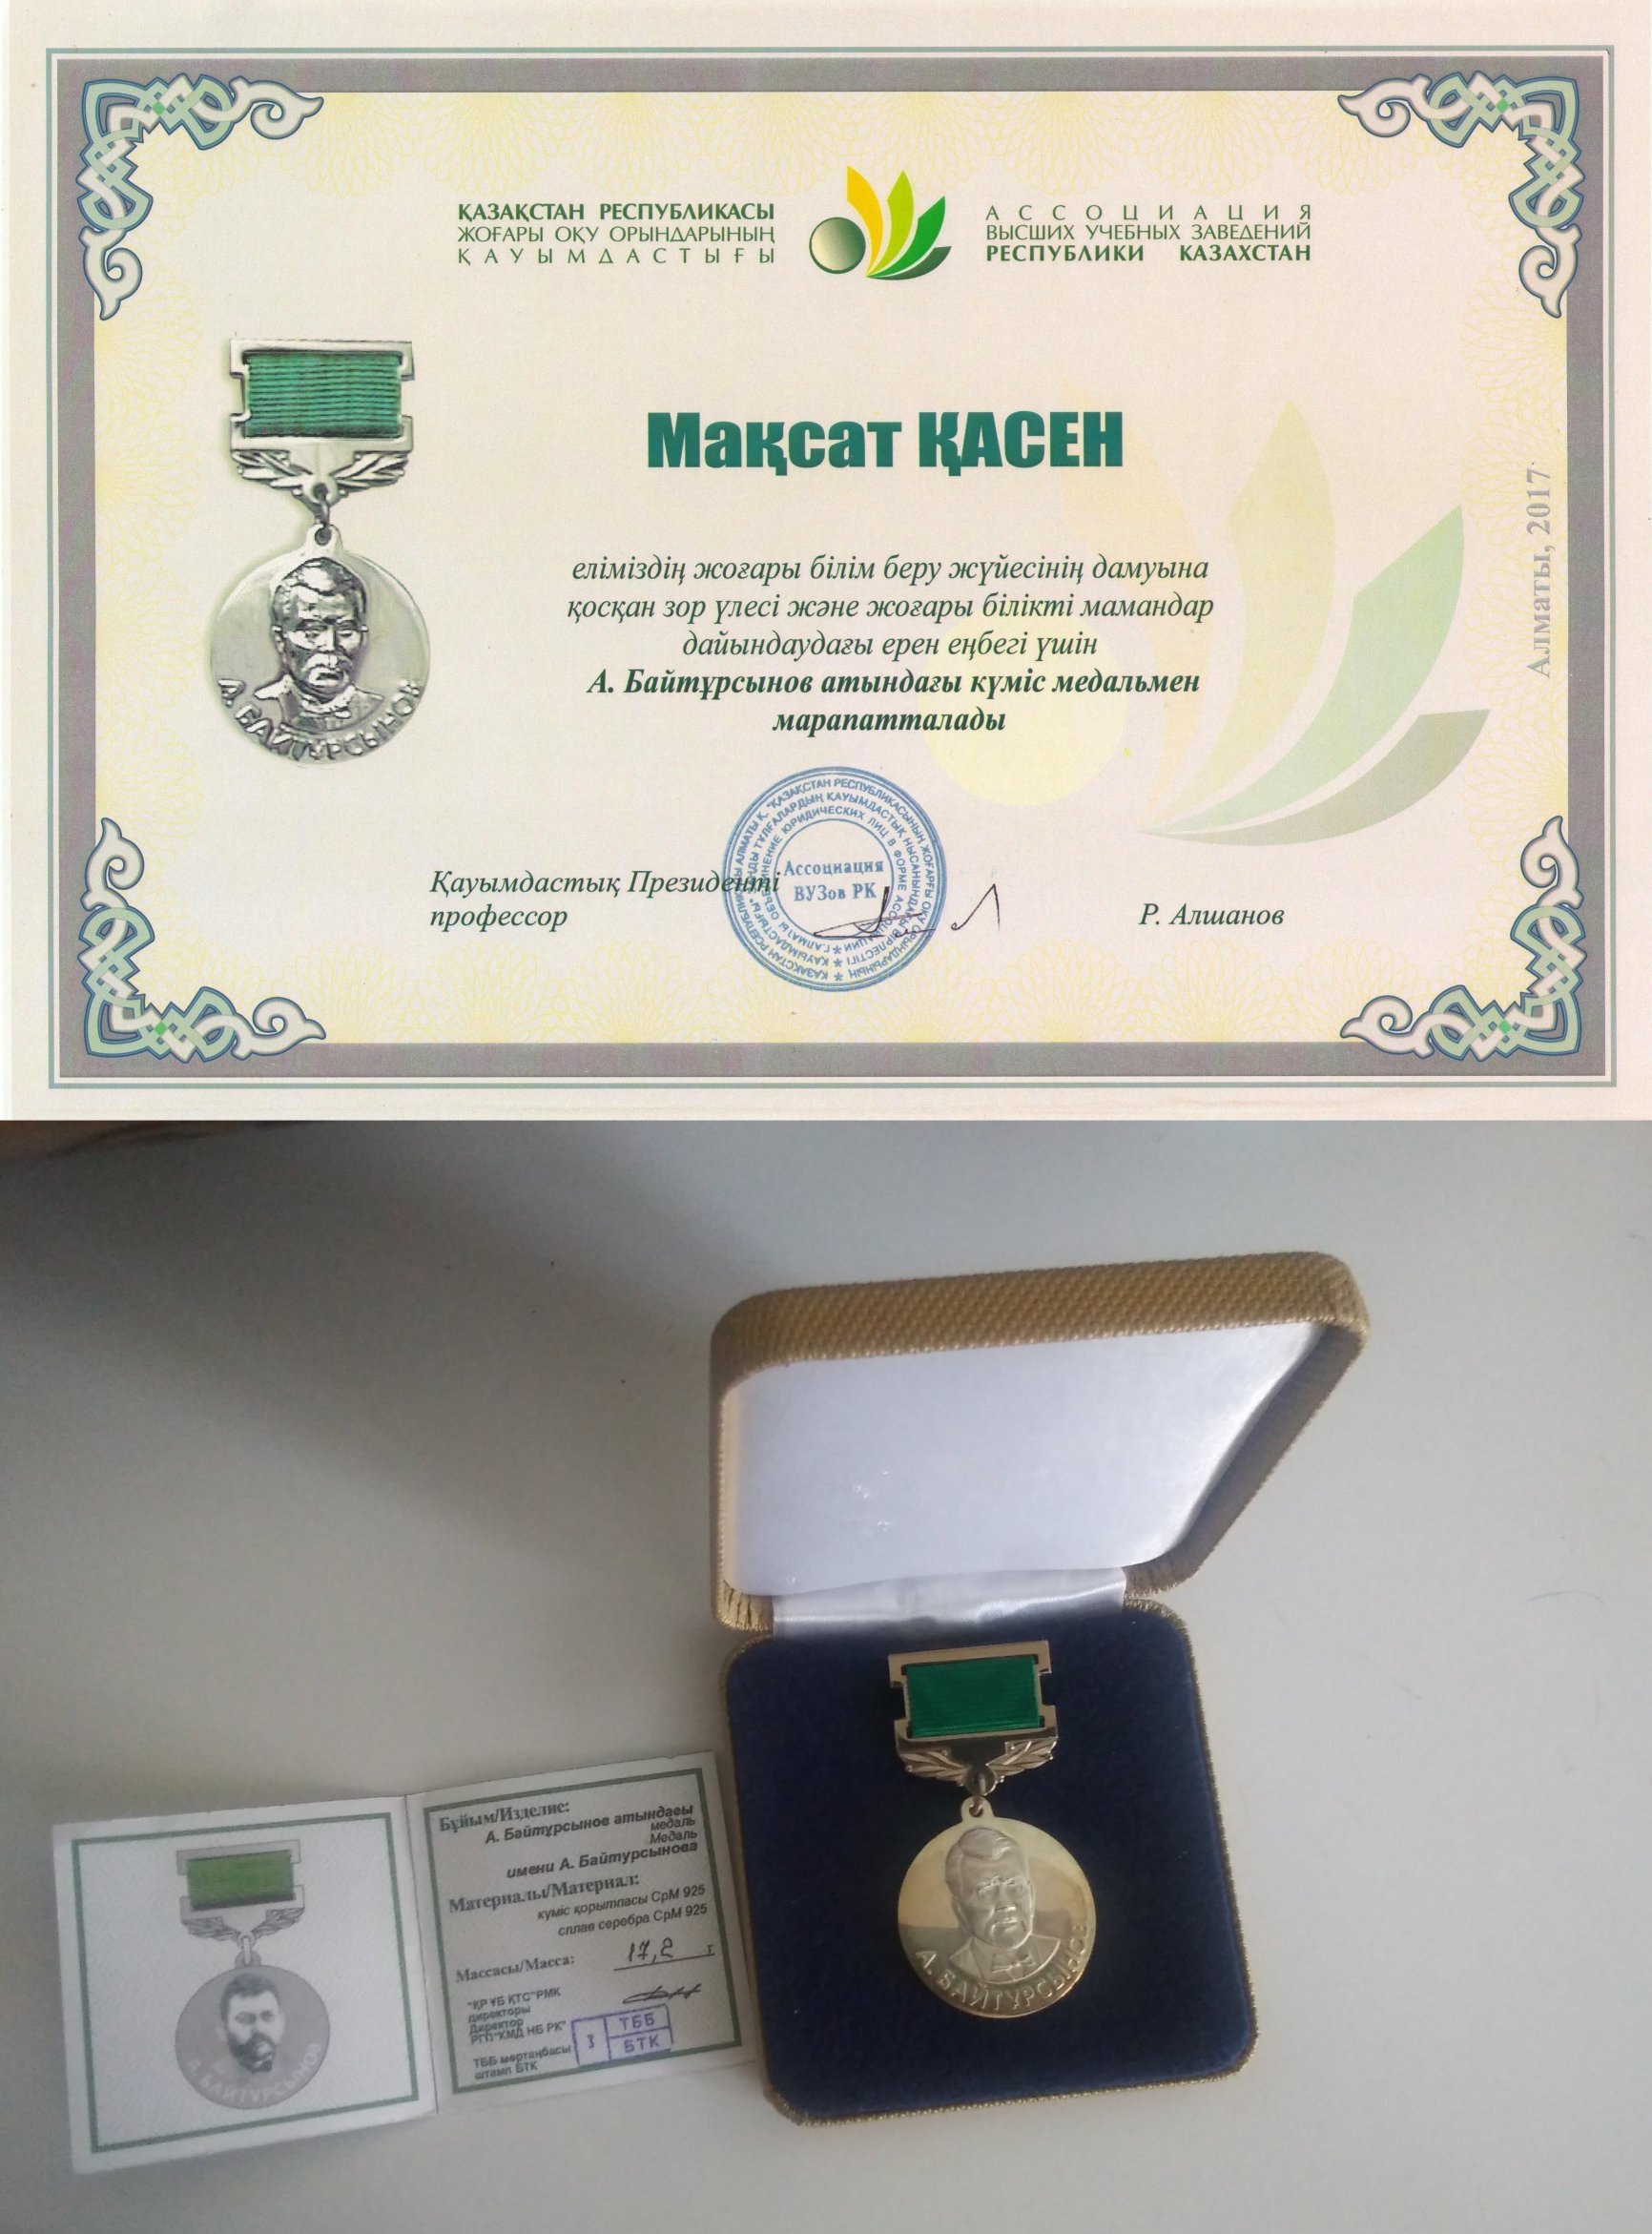 Dr. Maxat Kassen received the 2017 Baitursynov Silver Medal (Almaty, Kazakhstan)